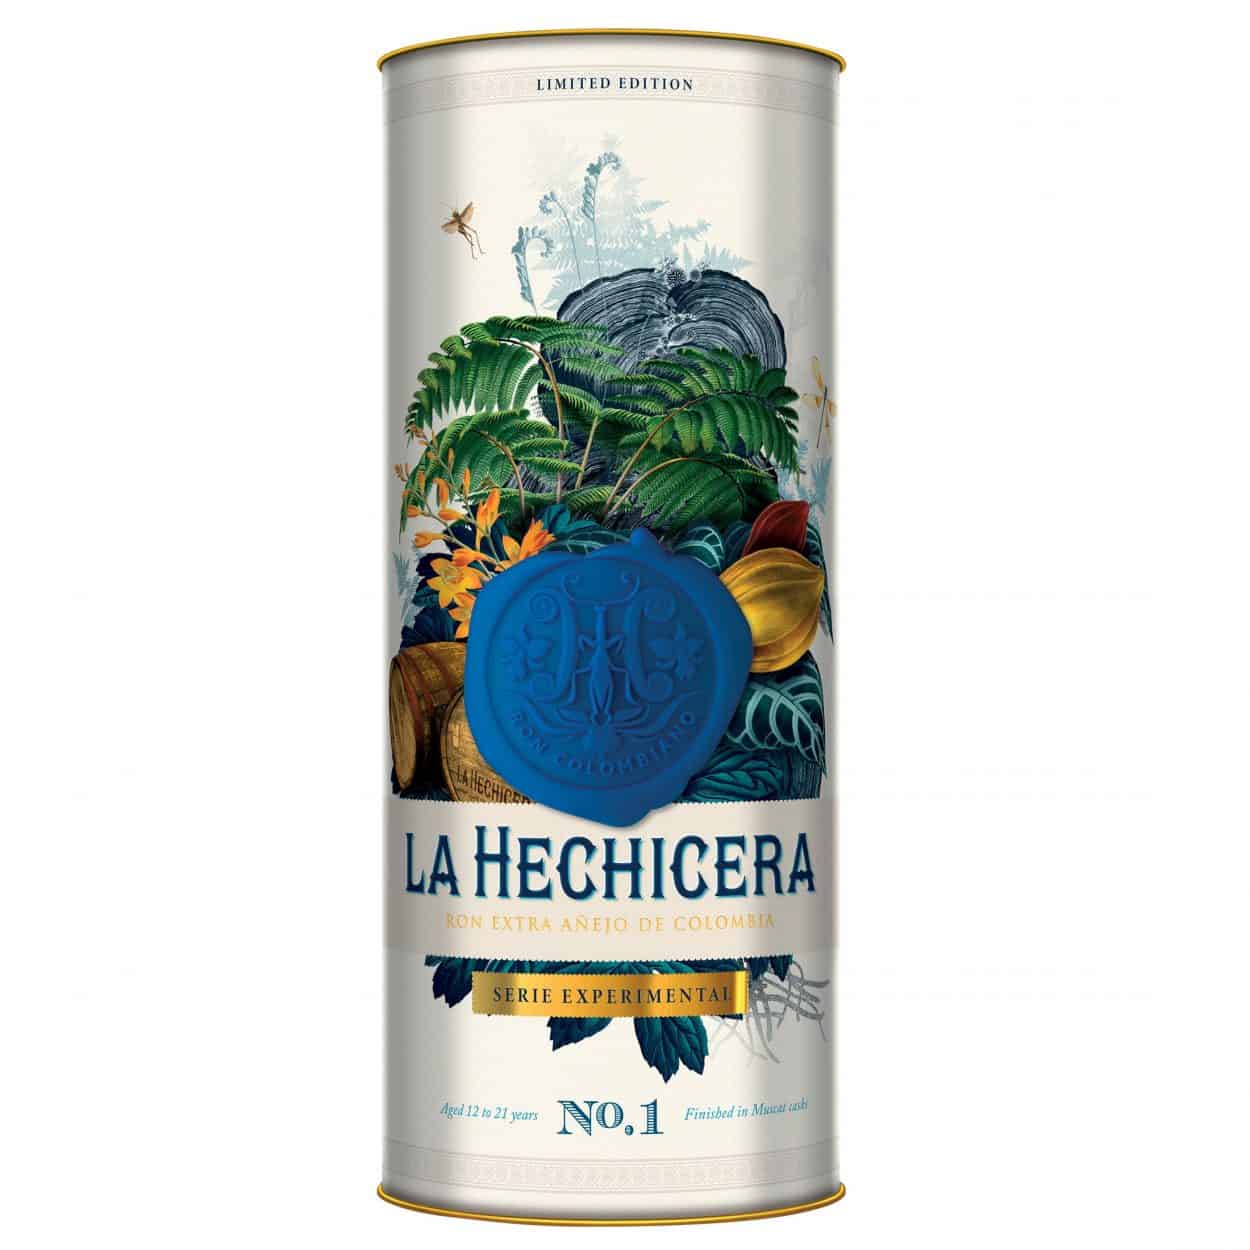 Stylez Hechicera No - Moscatel Finish Series 1 70cl La Experimental 43%Vol Rum Cask